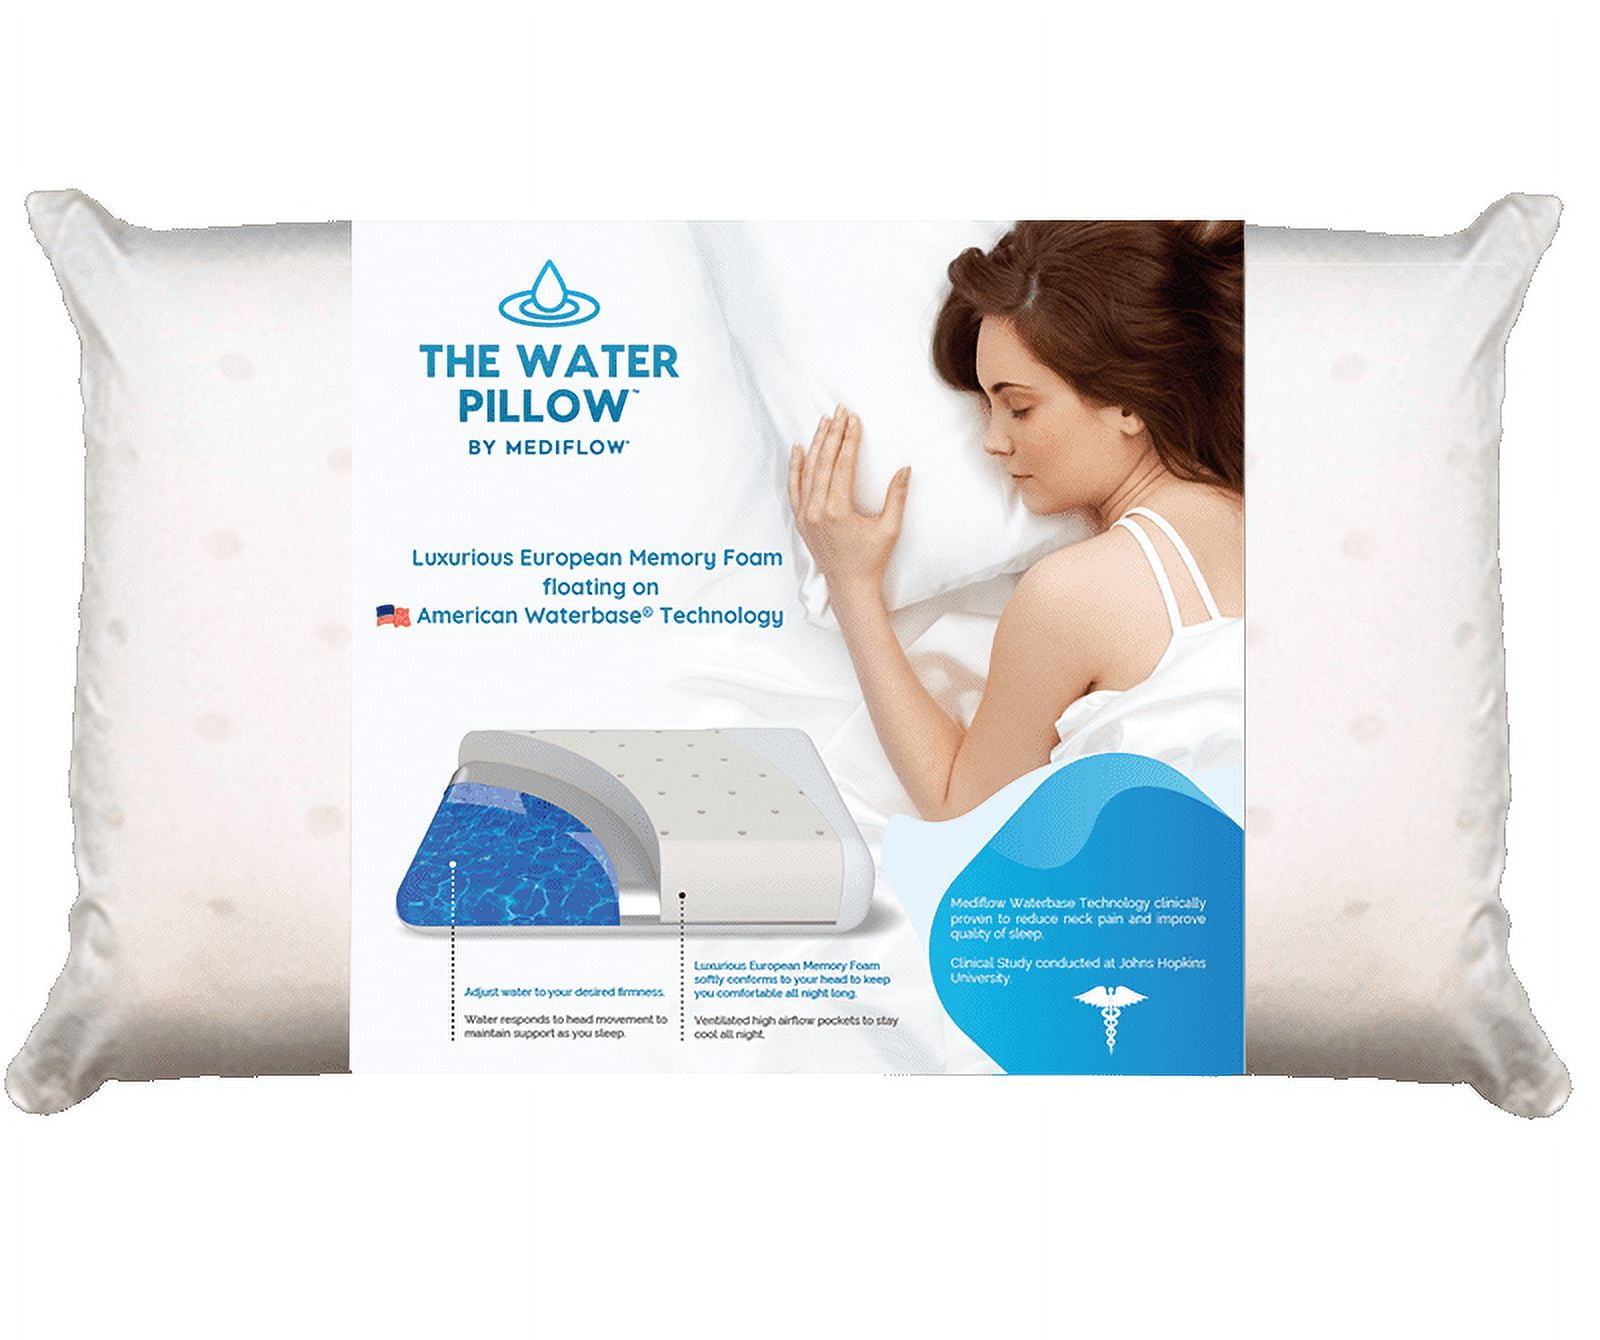 Original Down Water Pillow, Twin Pack